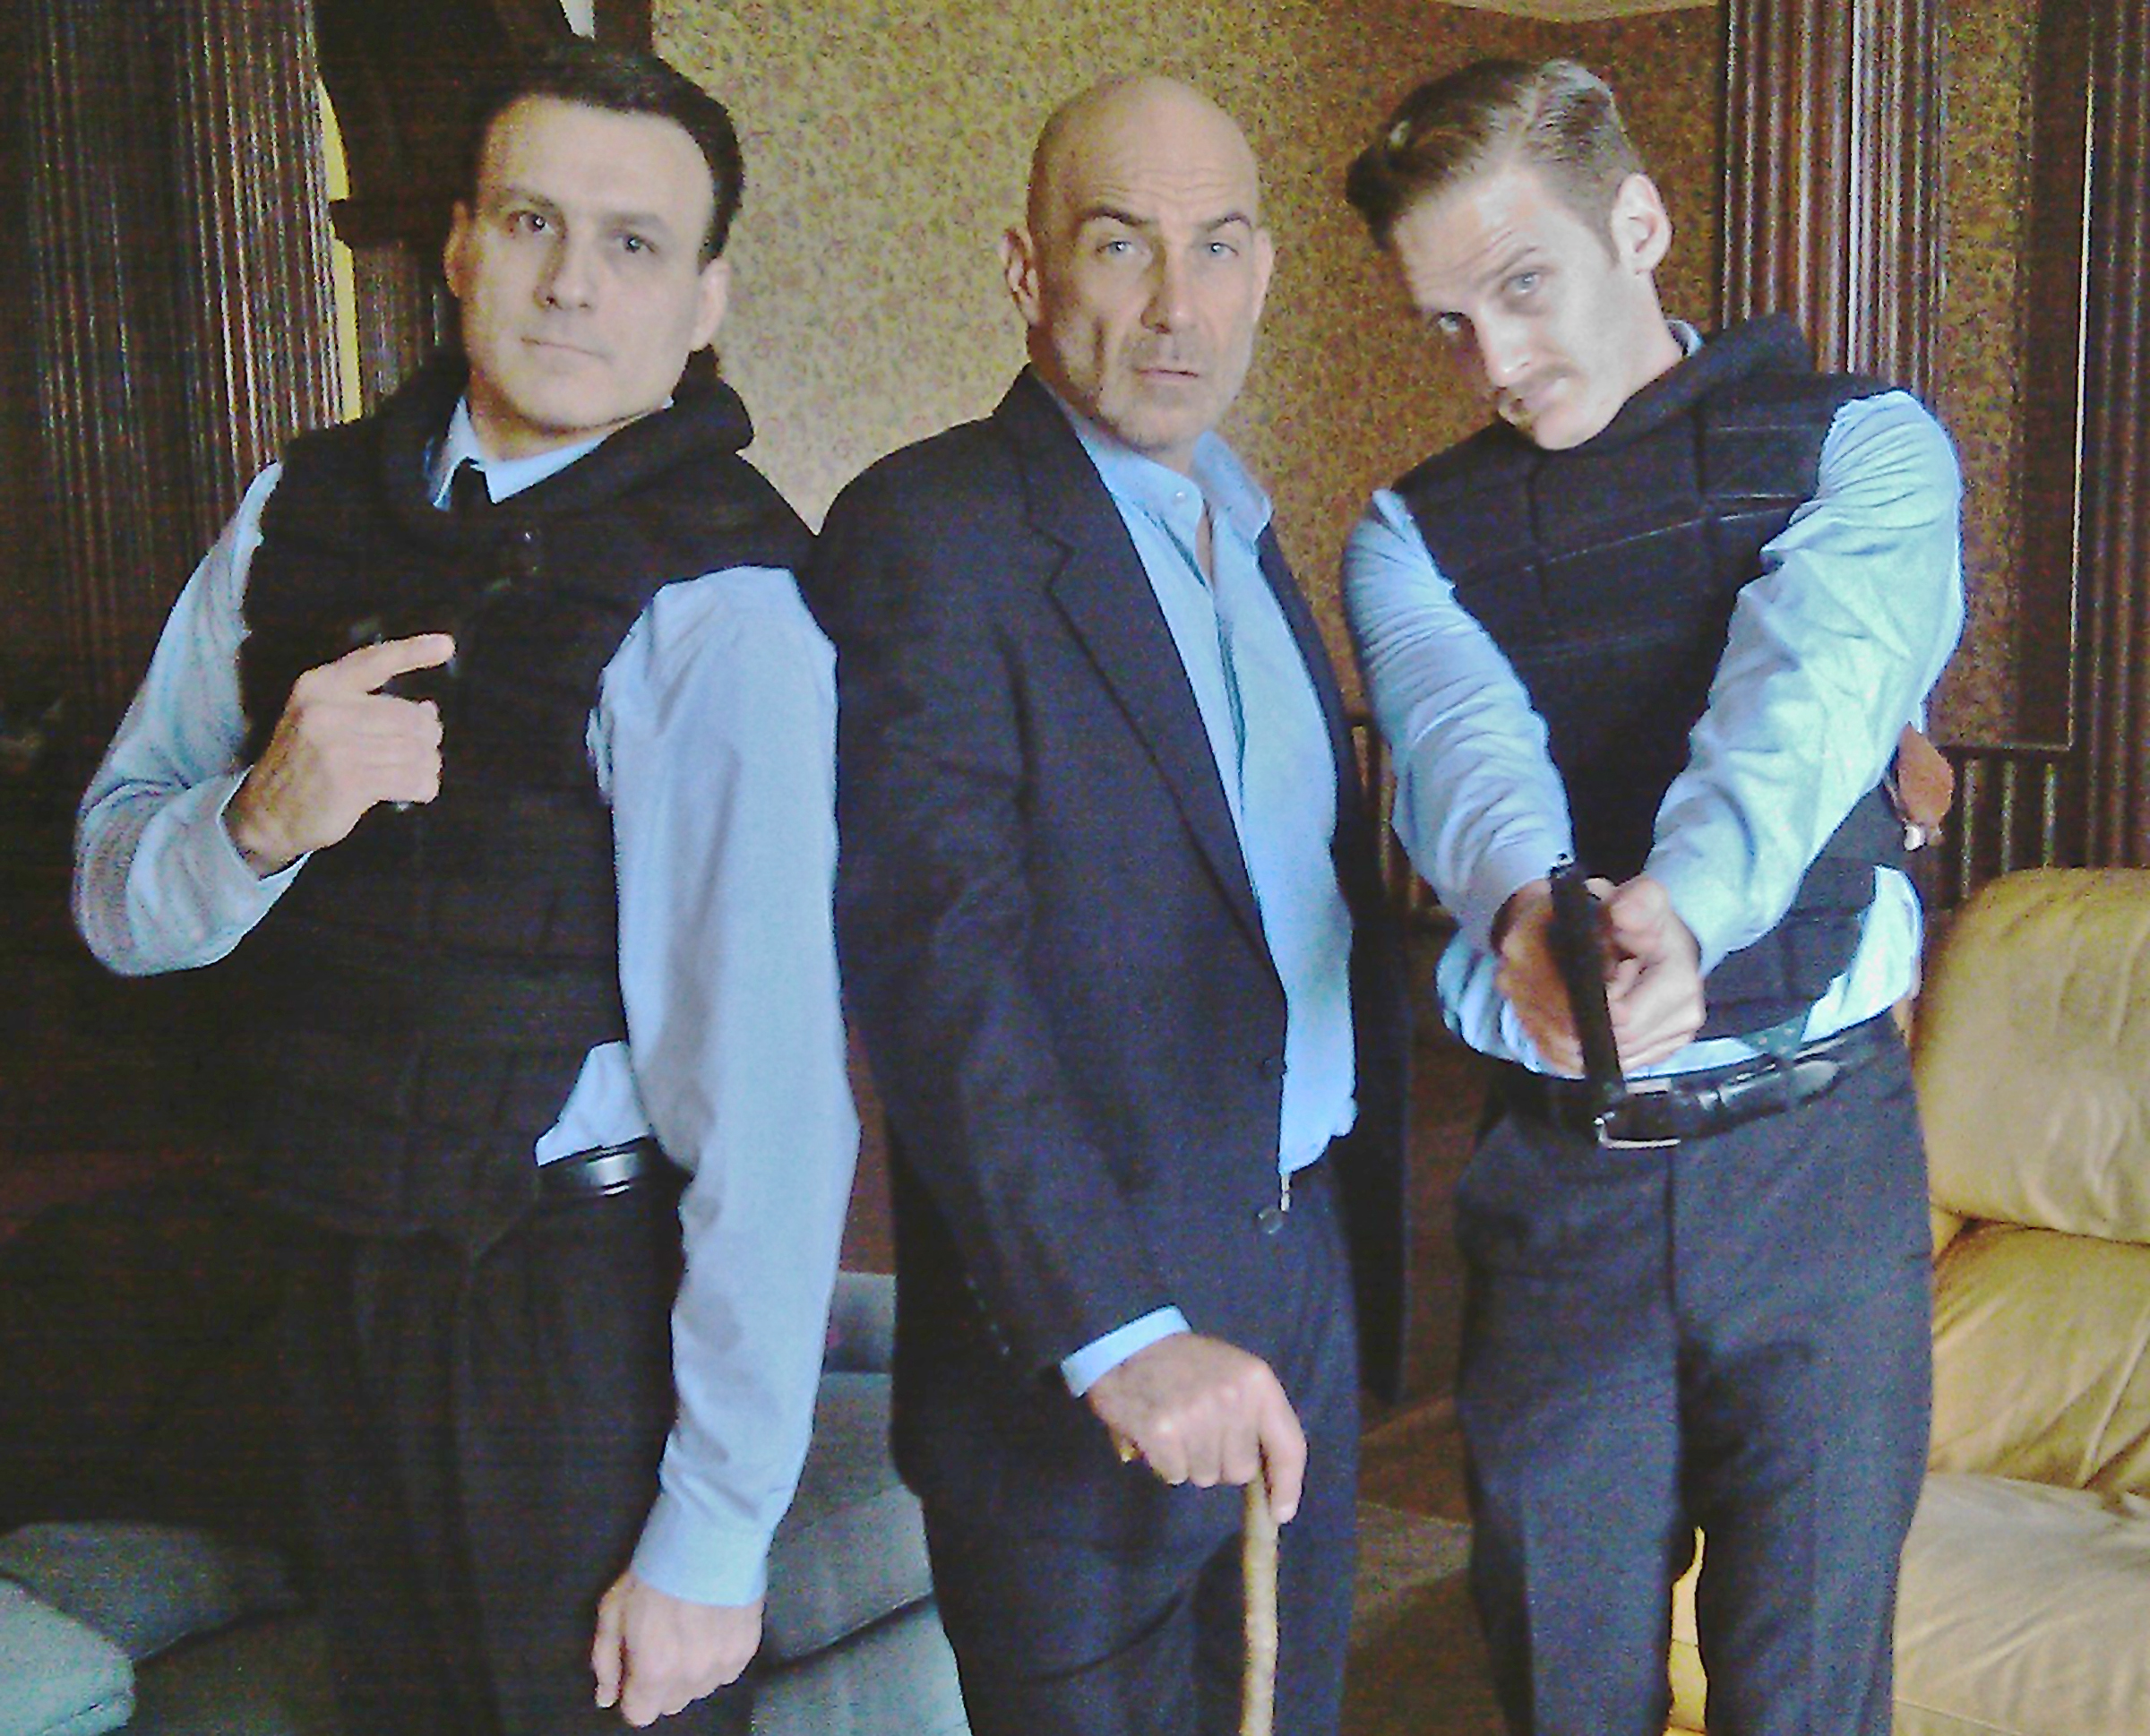 Agents Fidelio and Koldonski pose with 